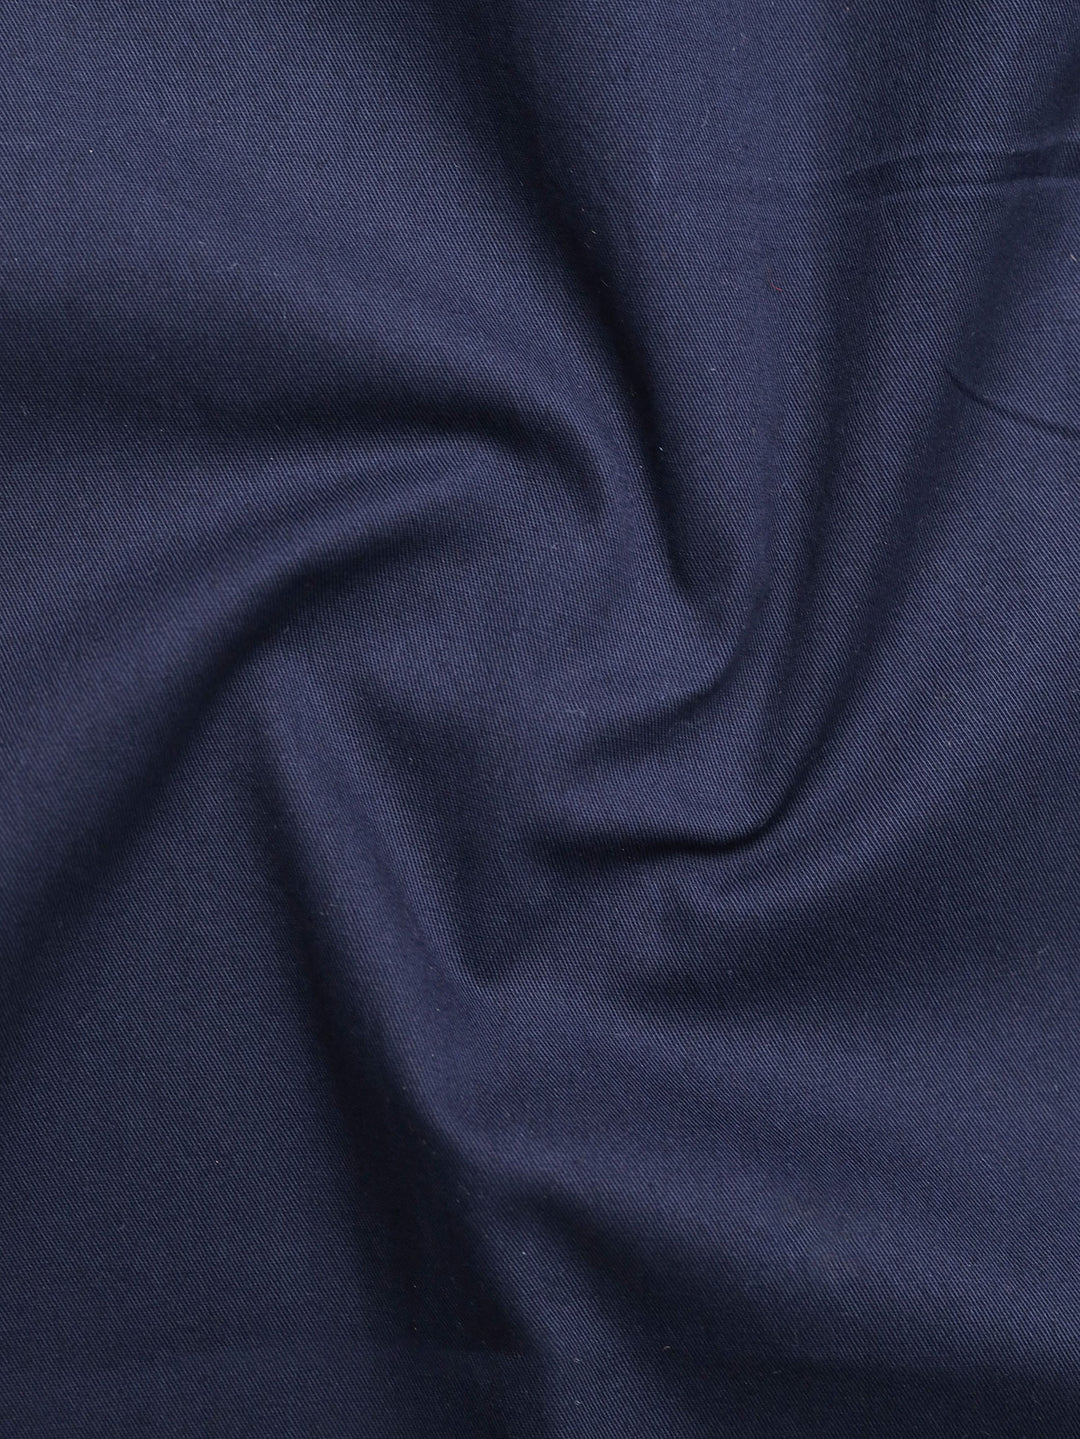 Denim Blue Premium Super Soft Solid Cotton Mandarin Collar Shirt